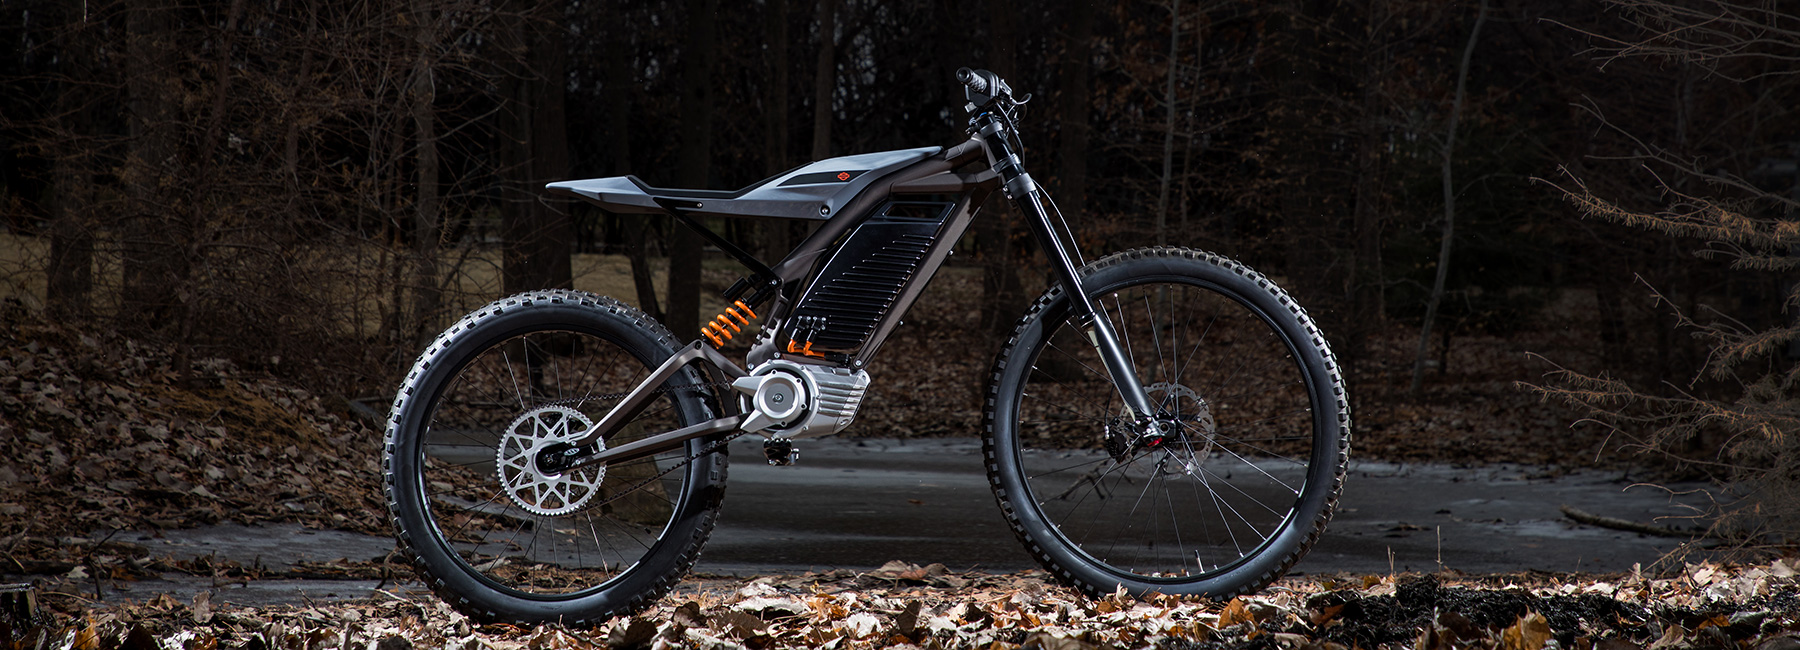 harley-davidson-electric-concept-bikes-designboom1800.jpg